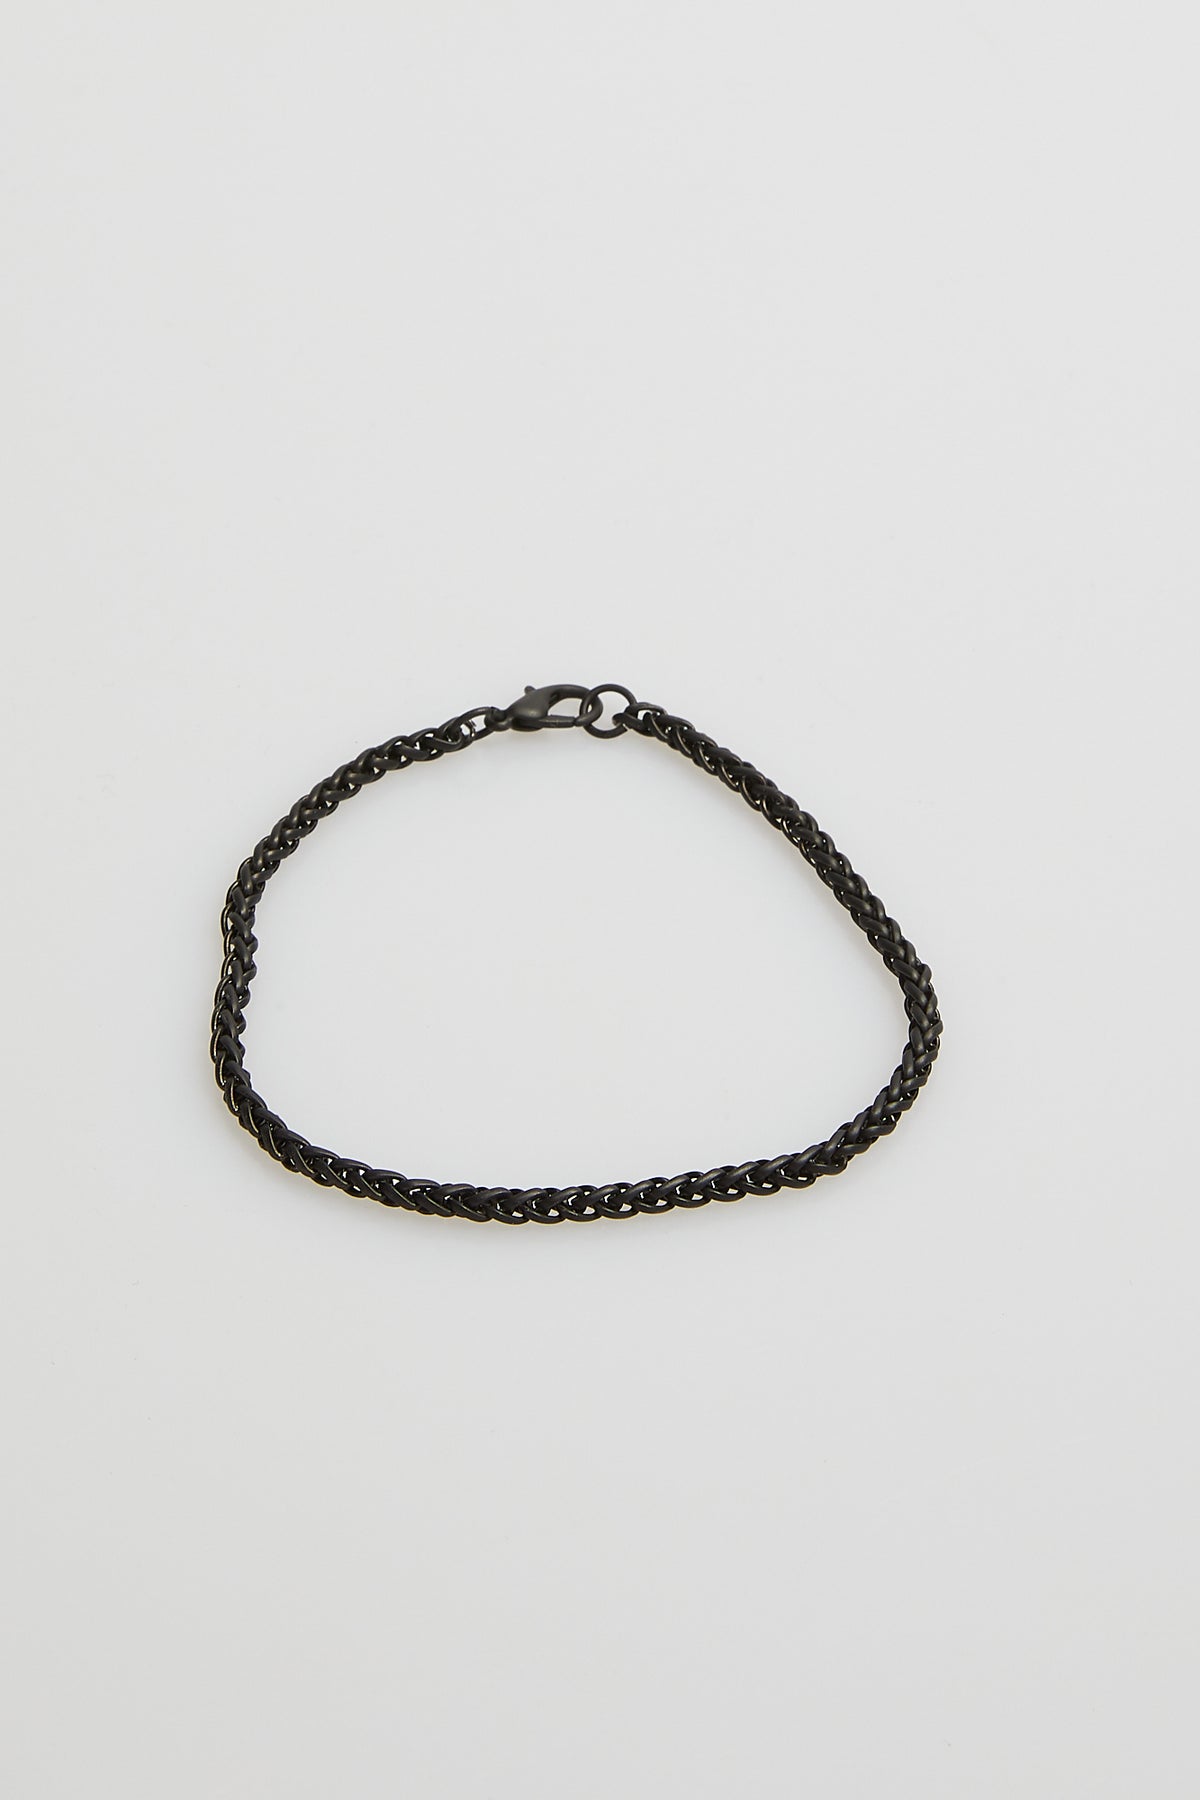 NTH Chain Bracelet Black NTH20201030-3